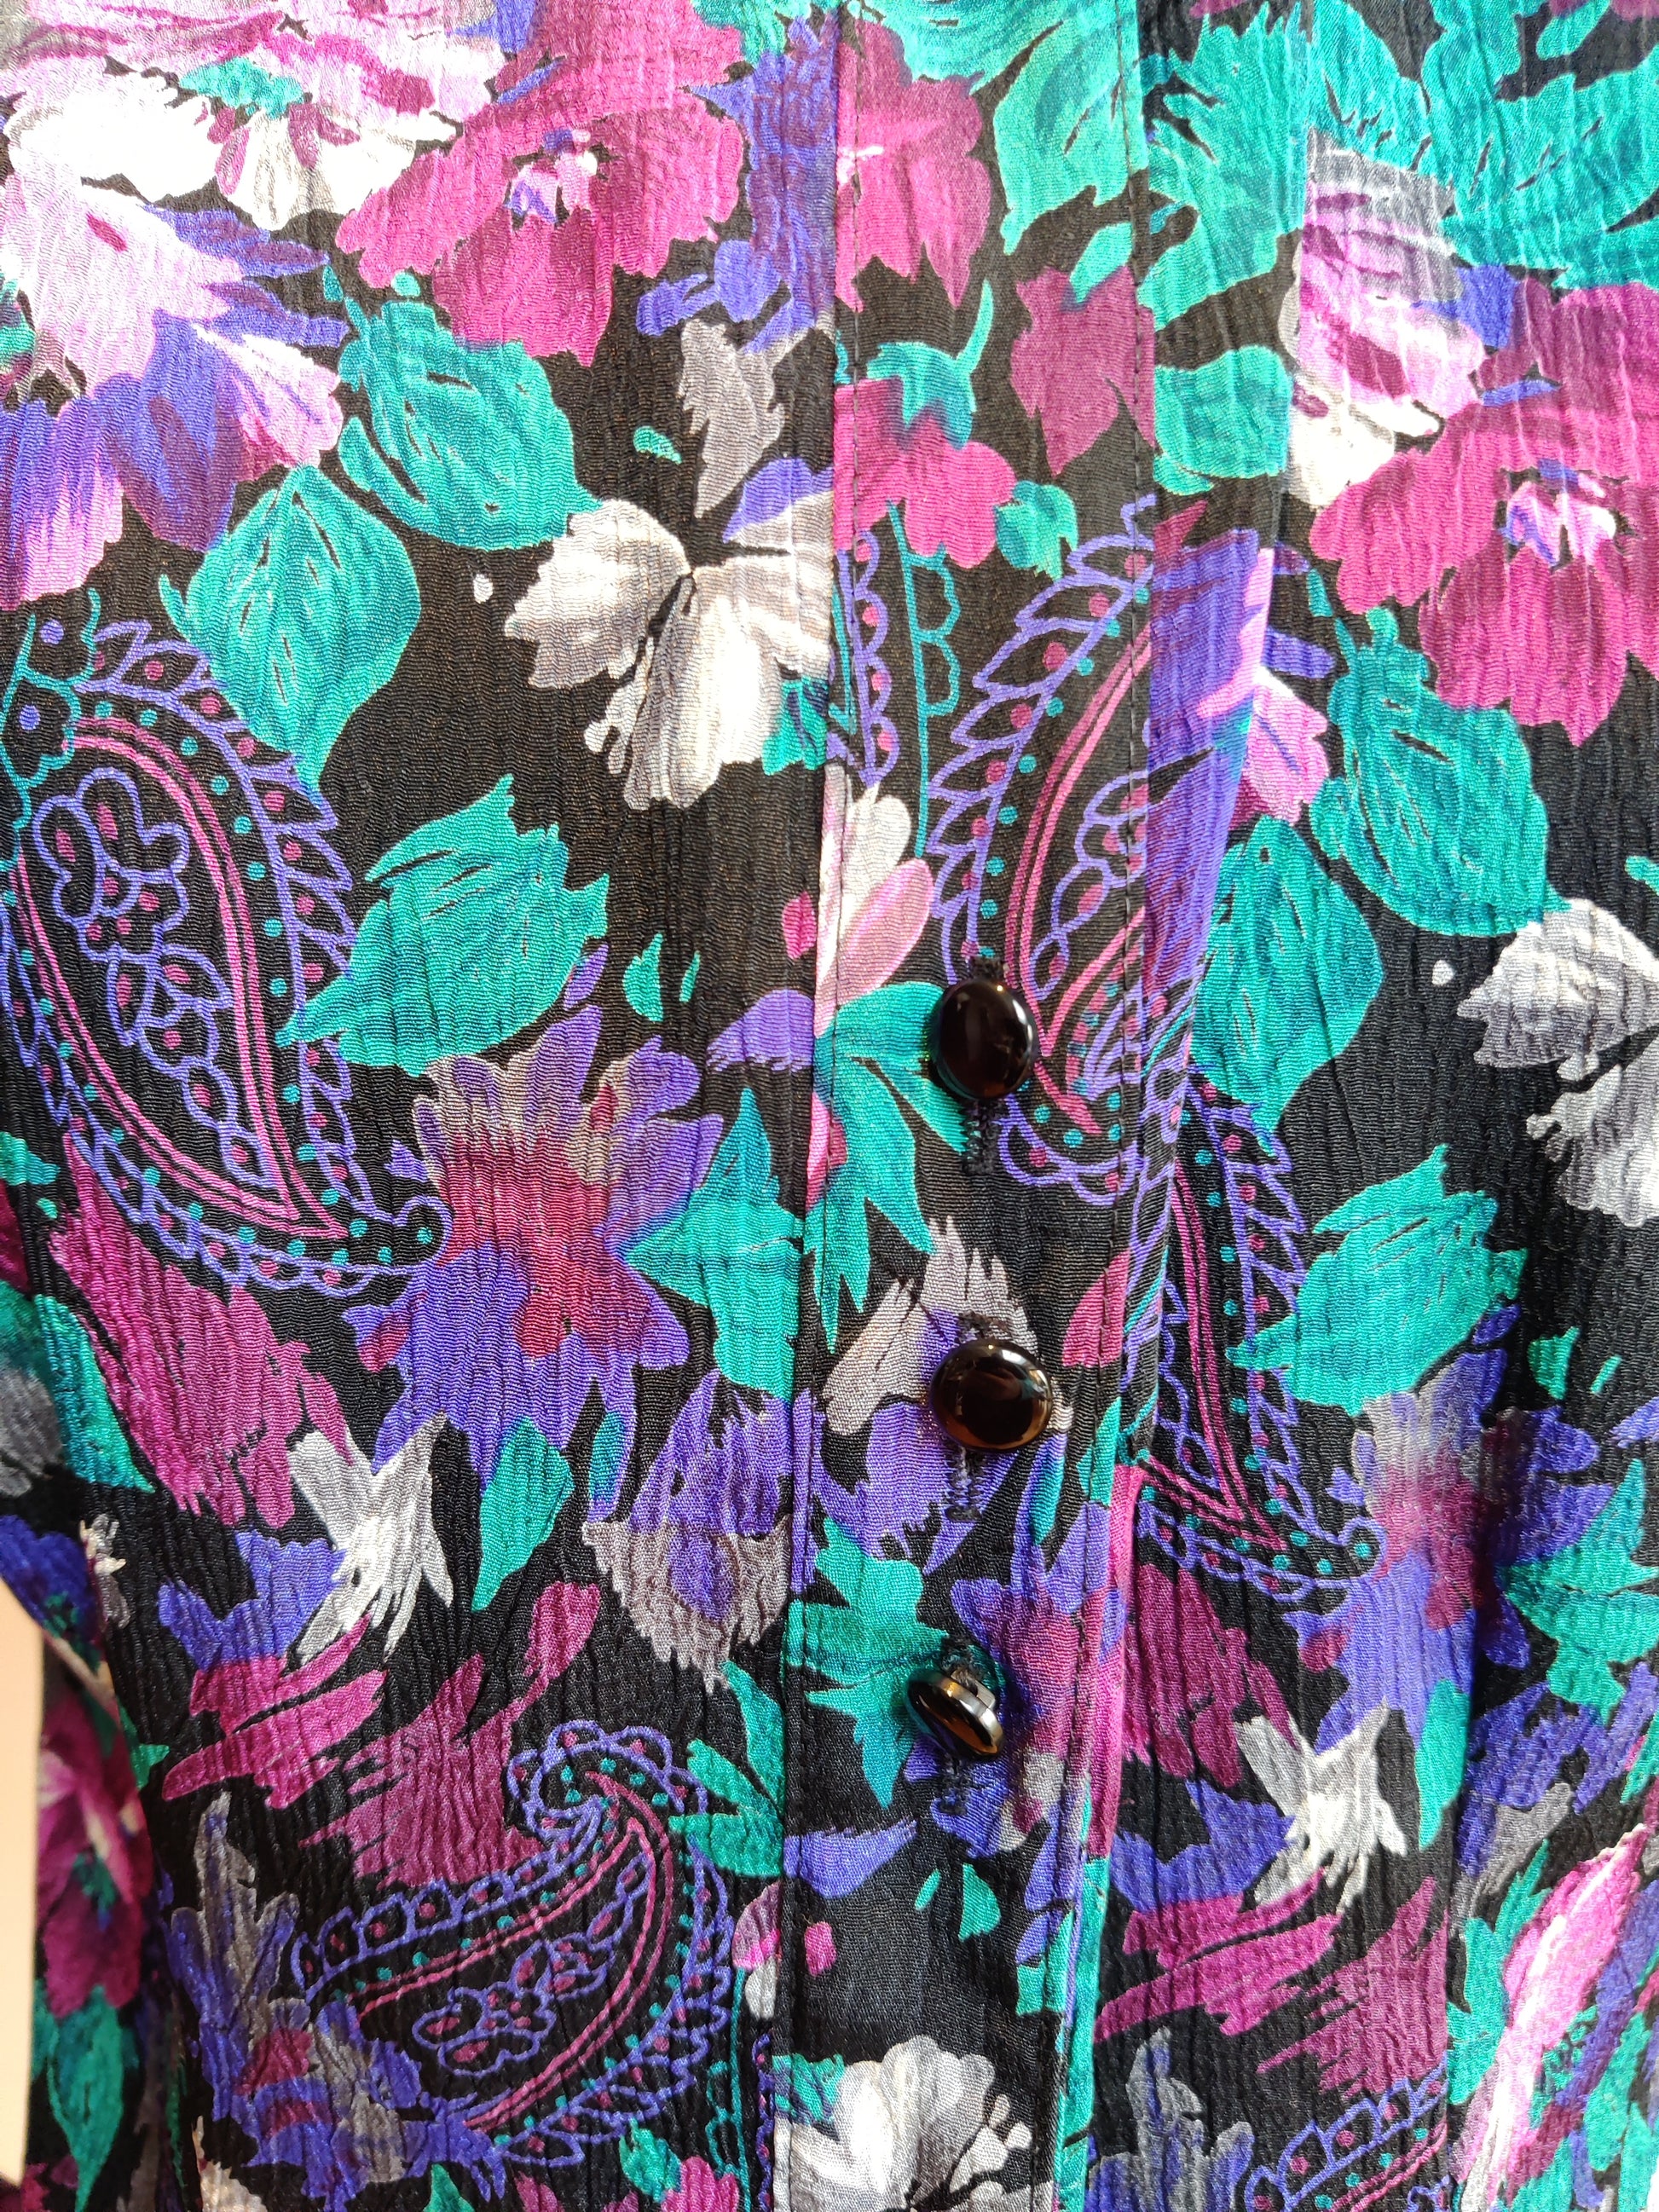 Cute button detail on 80s floral blouse.